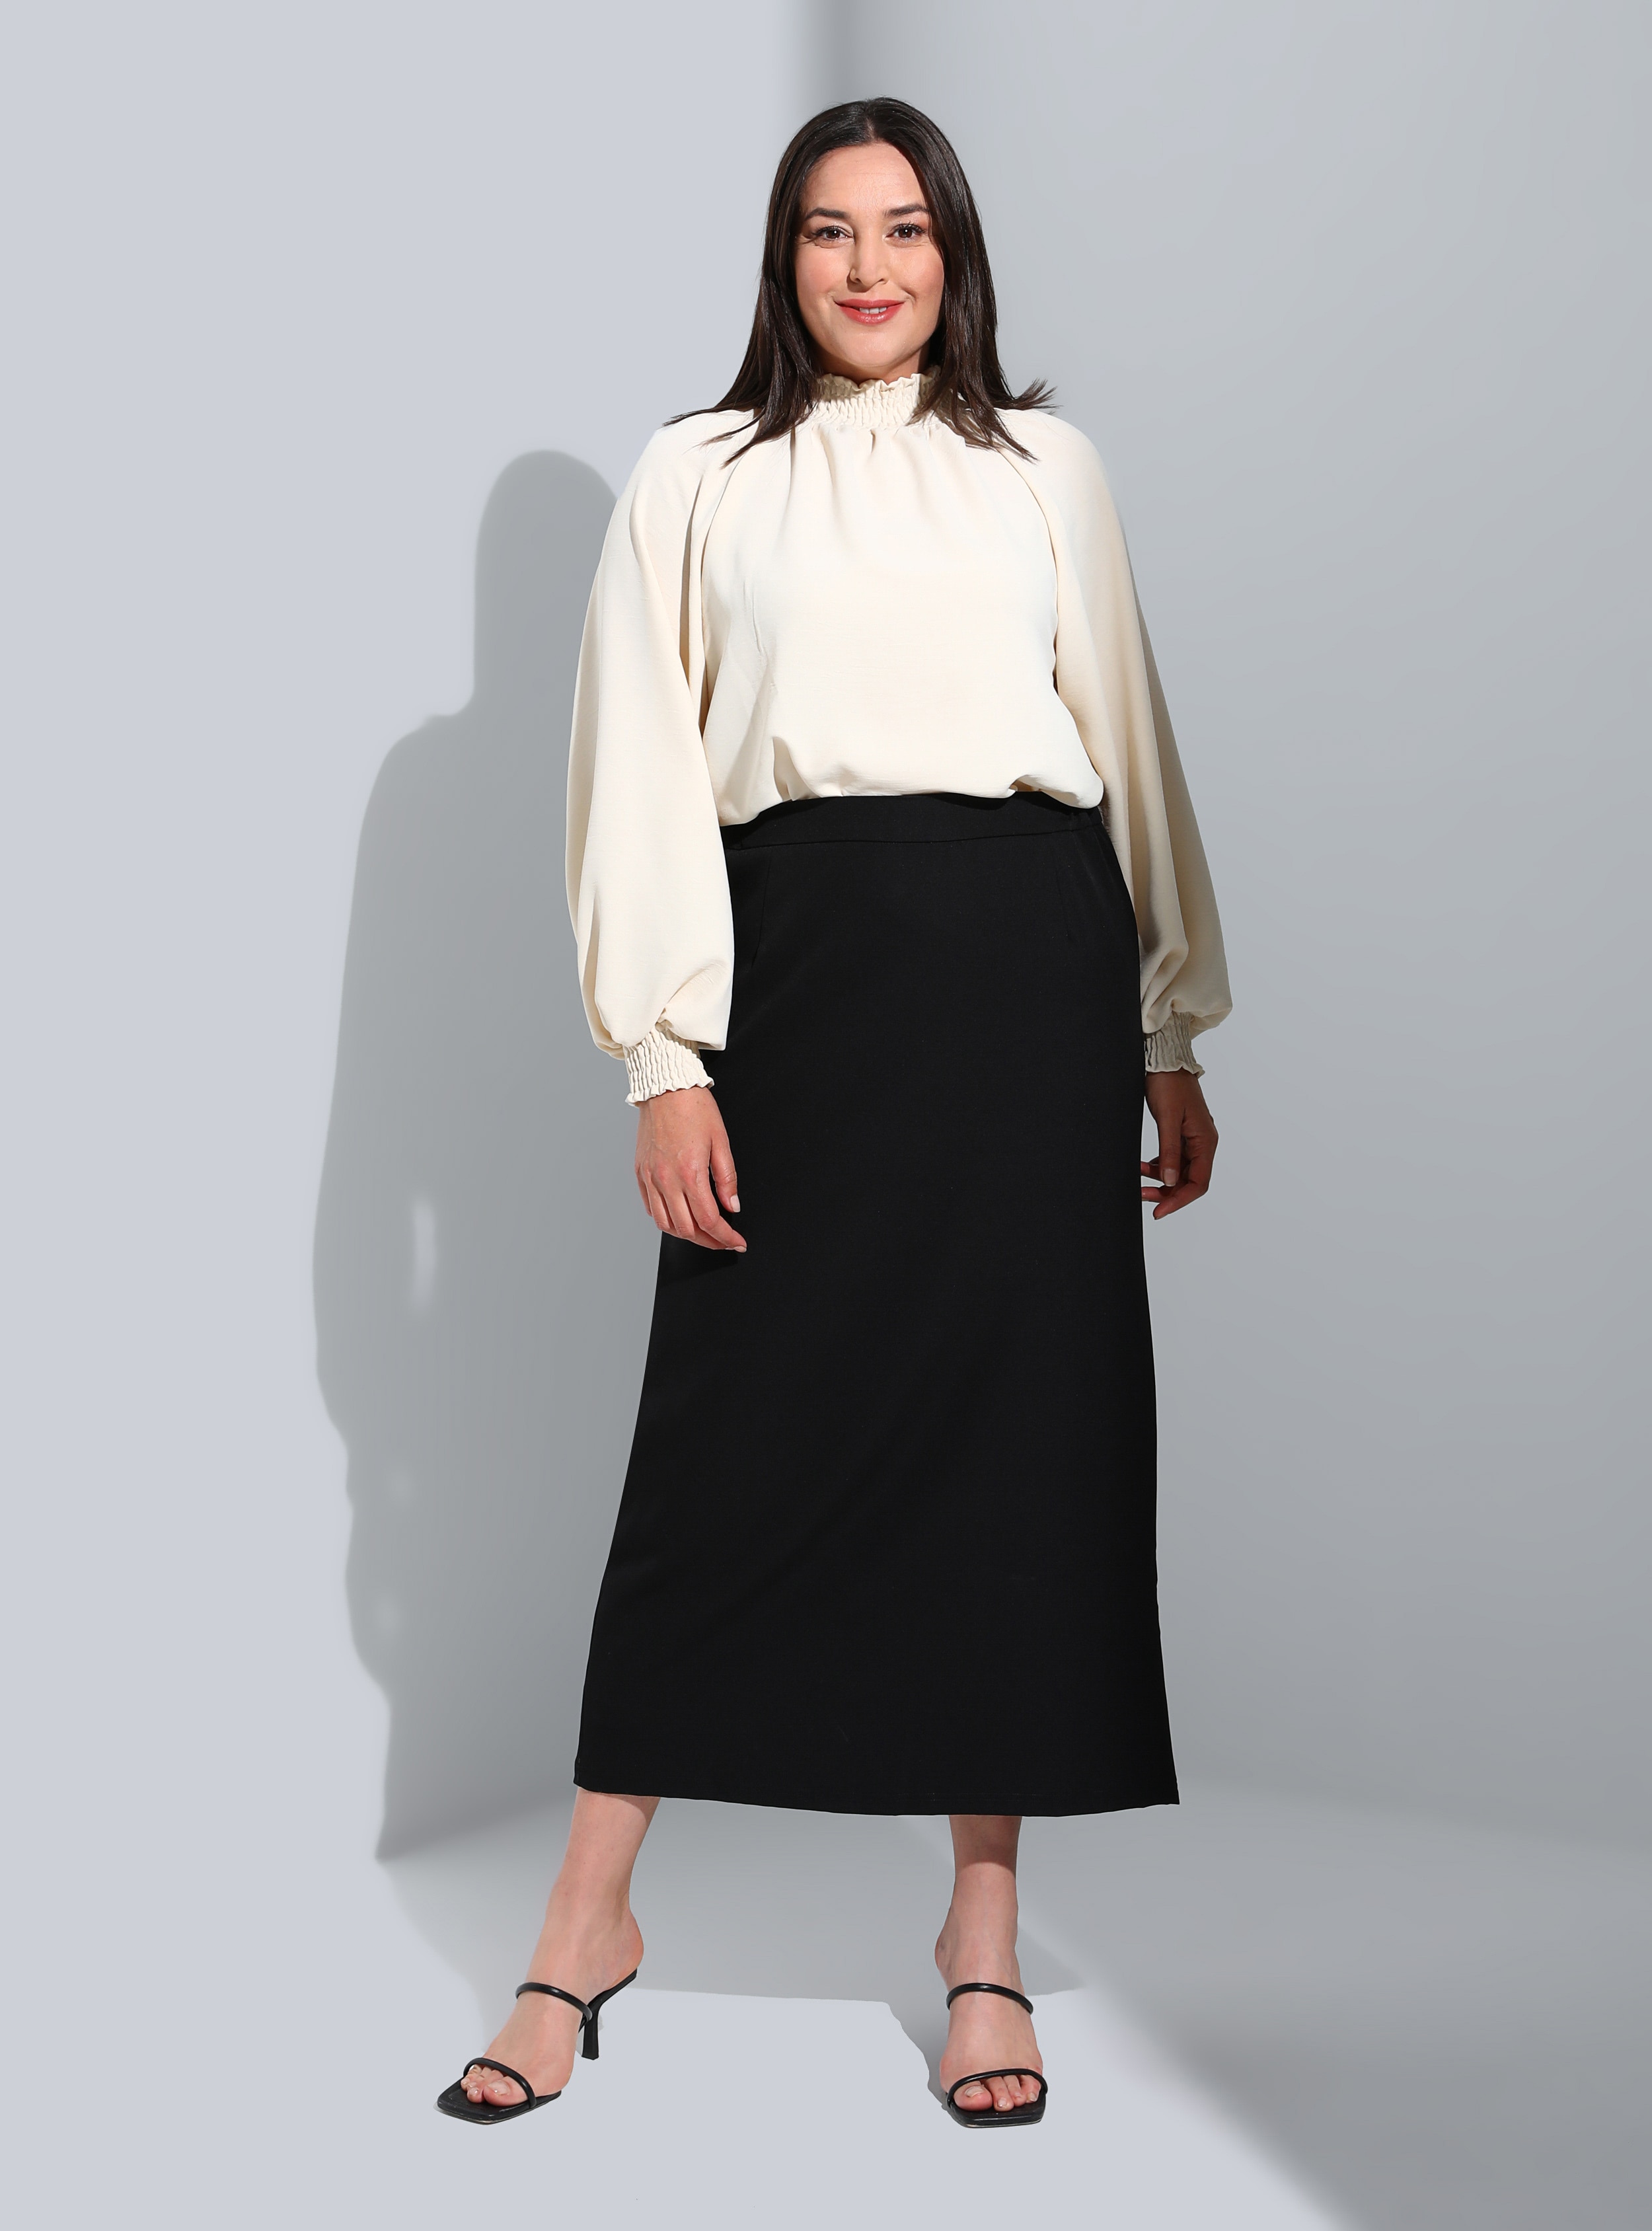 Plus Size Pencil Skirt With Hidden Slits Black